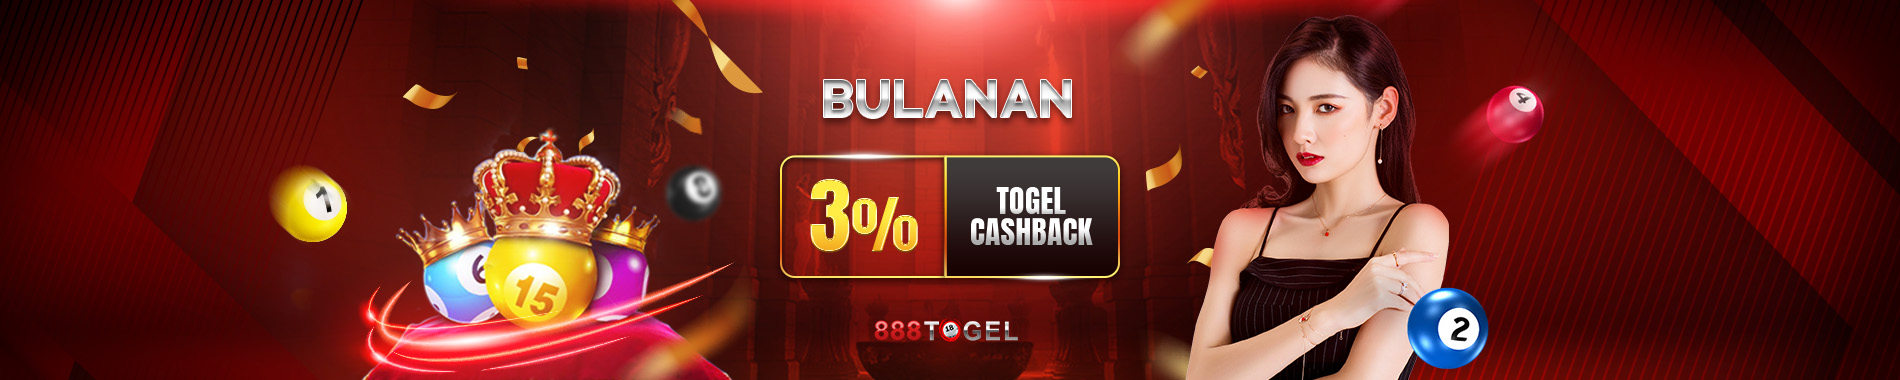 888Togel Cashback Toto Togel 3% Tanpa Batas